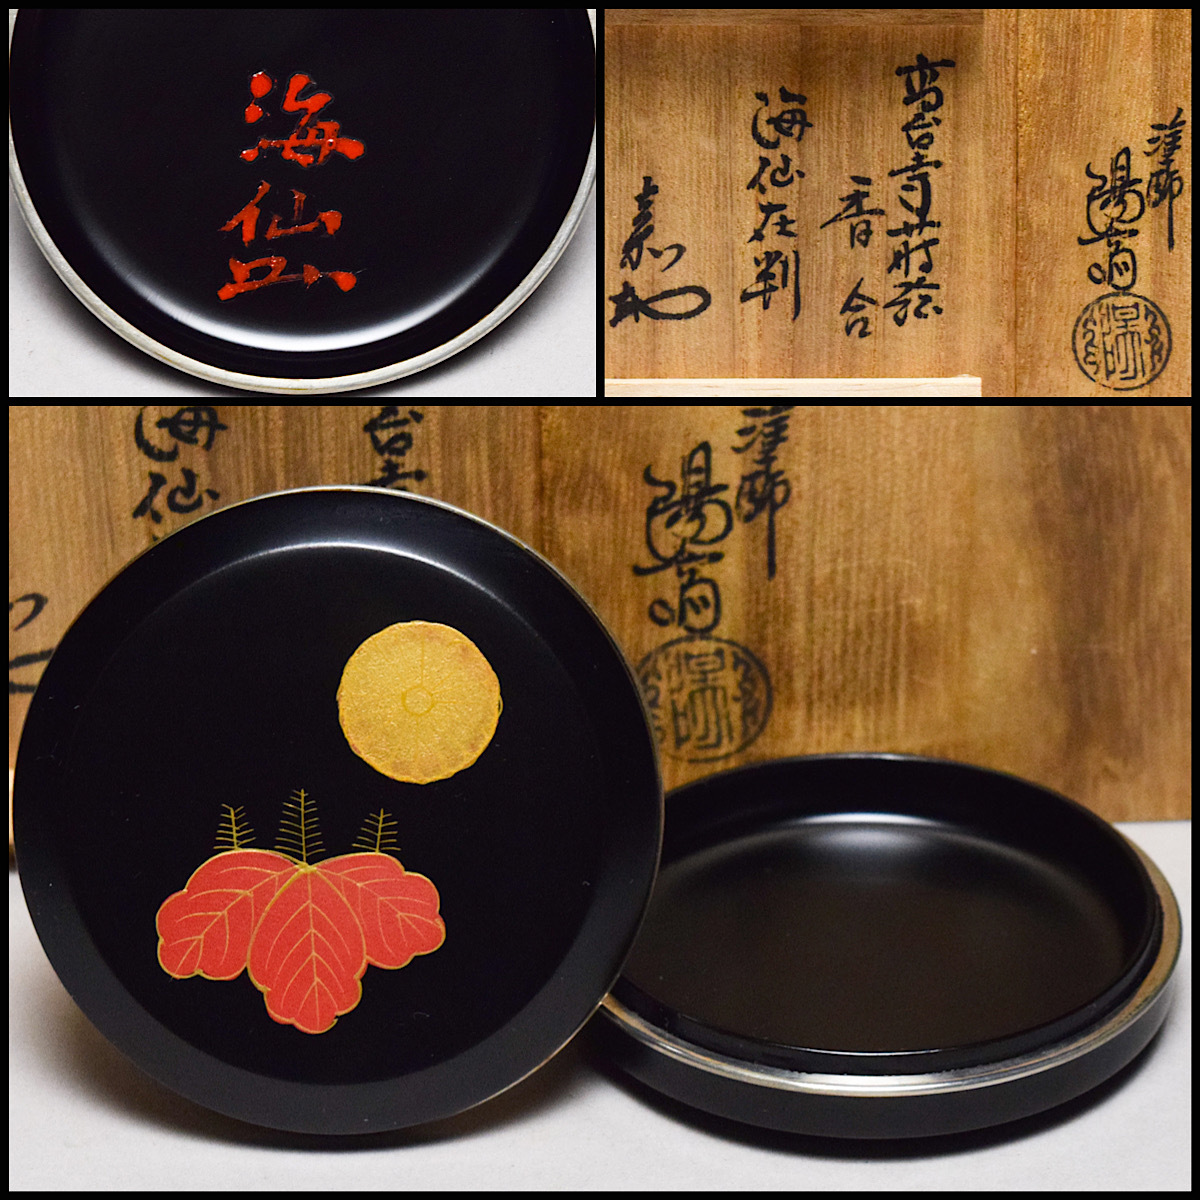 [...] paint ... height pcs temple lacqering .. incense case sea .. stamp * also box tea utensils lacquer ware lacquer [e-175]